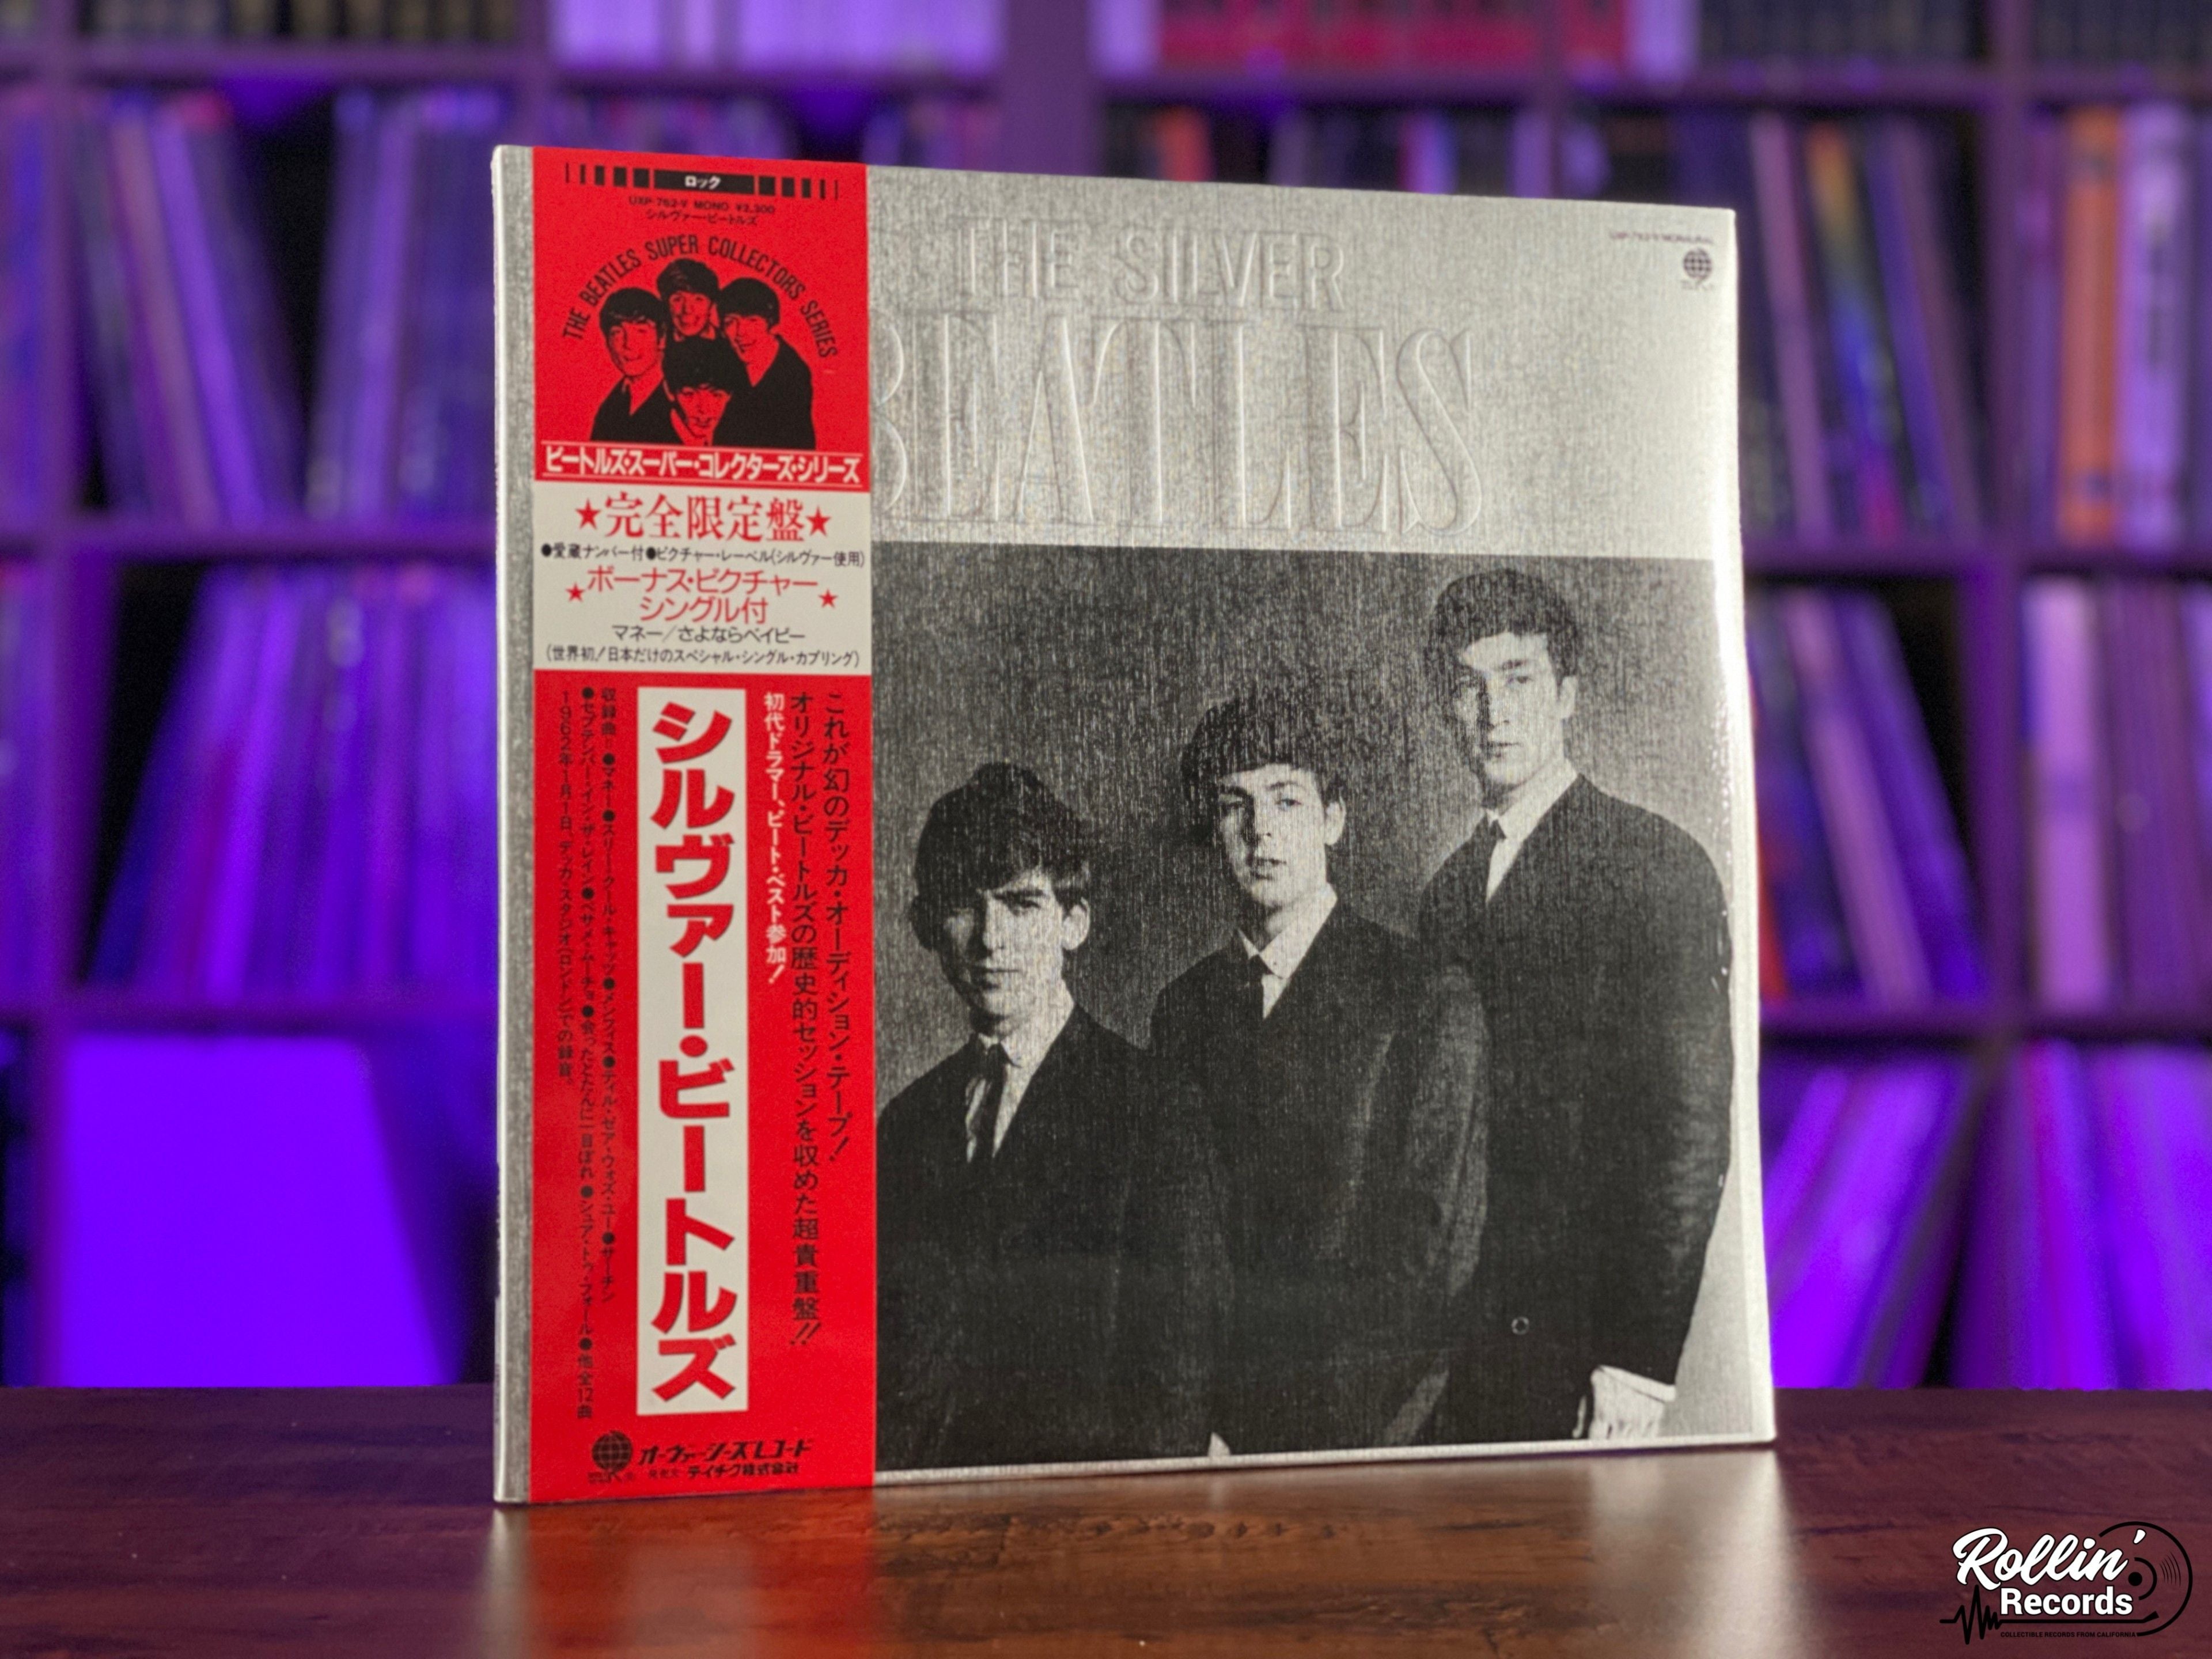 The Beatles - The Silver Beatles UXP-762-V Japan OBI – Rollin' Records